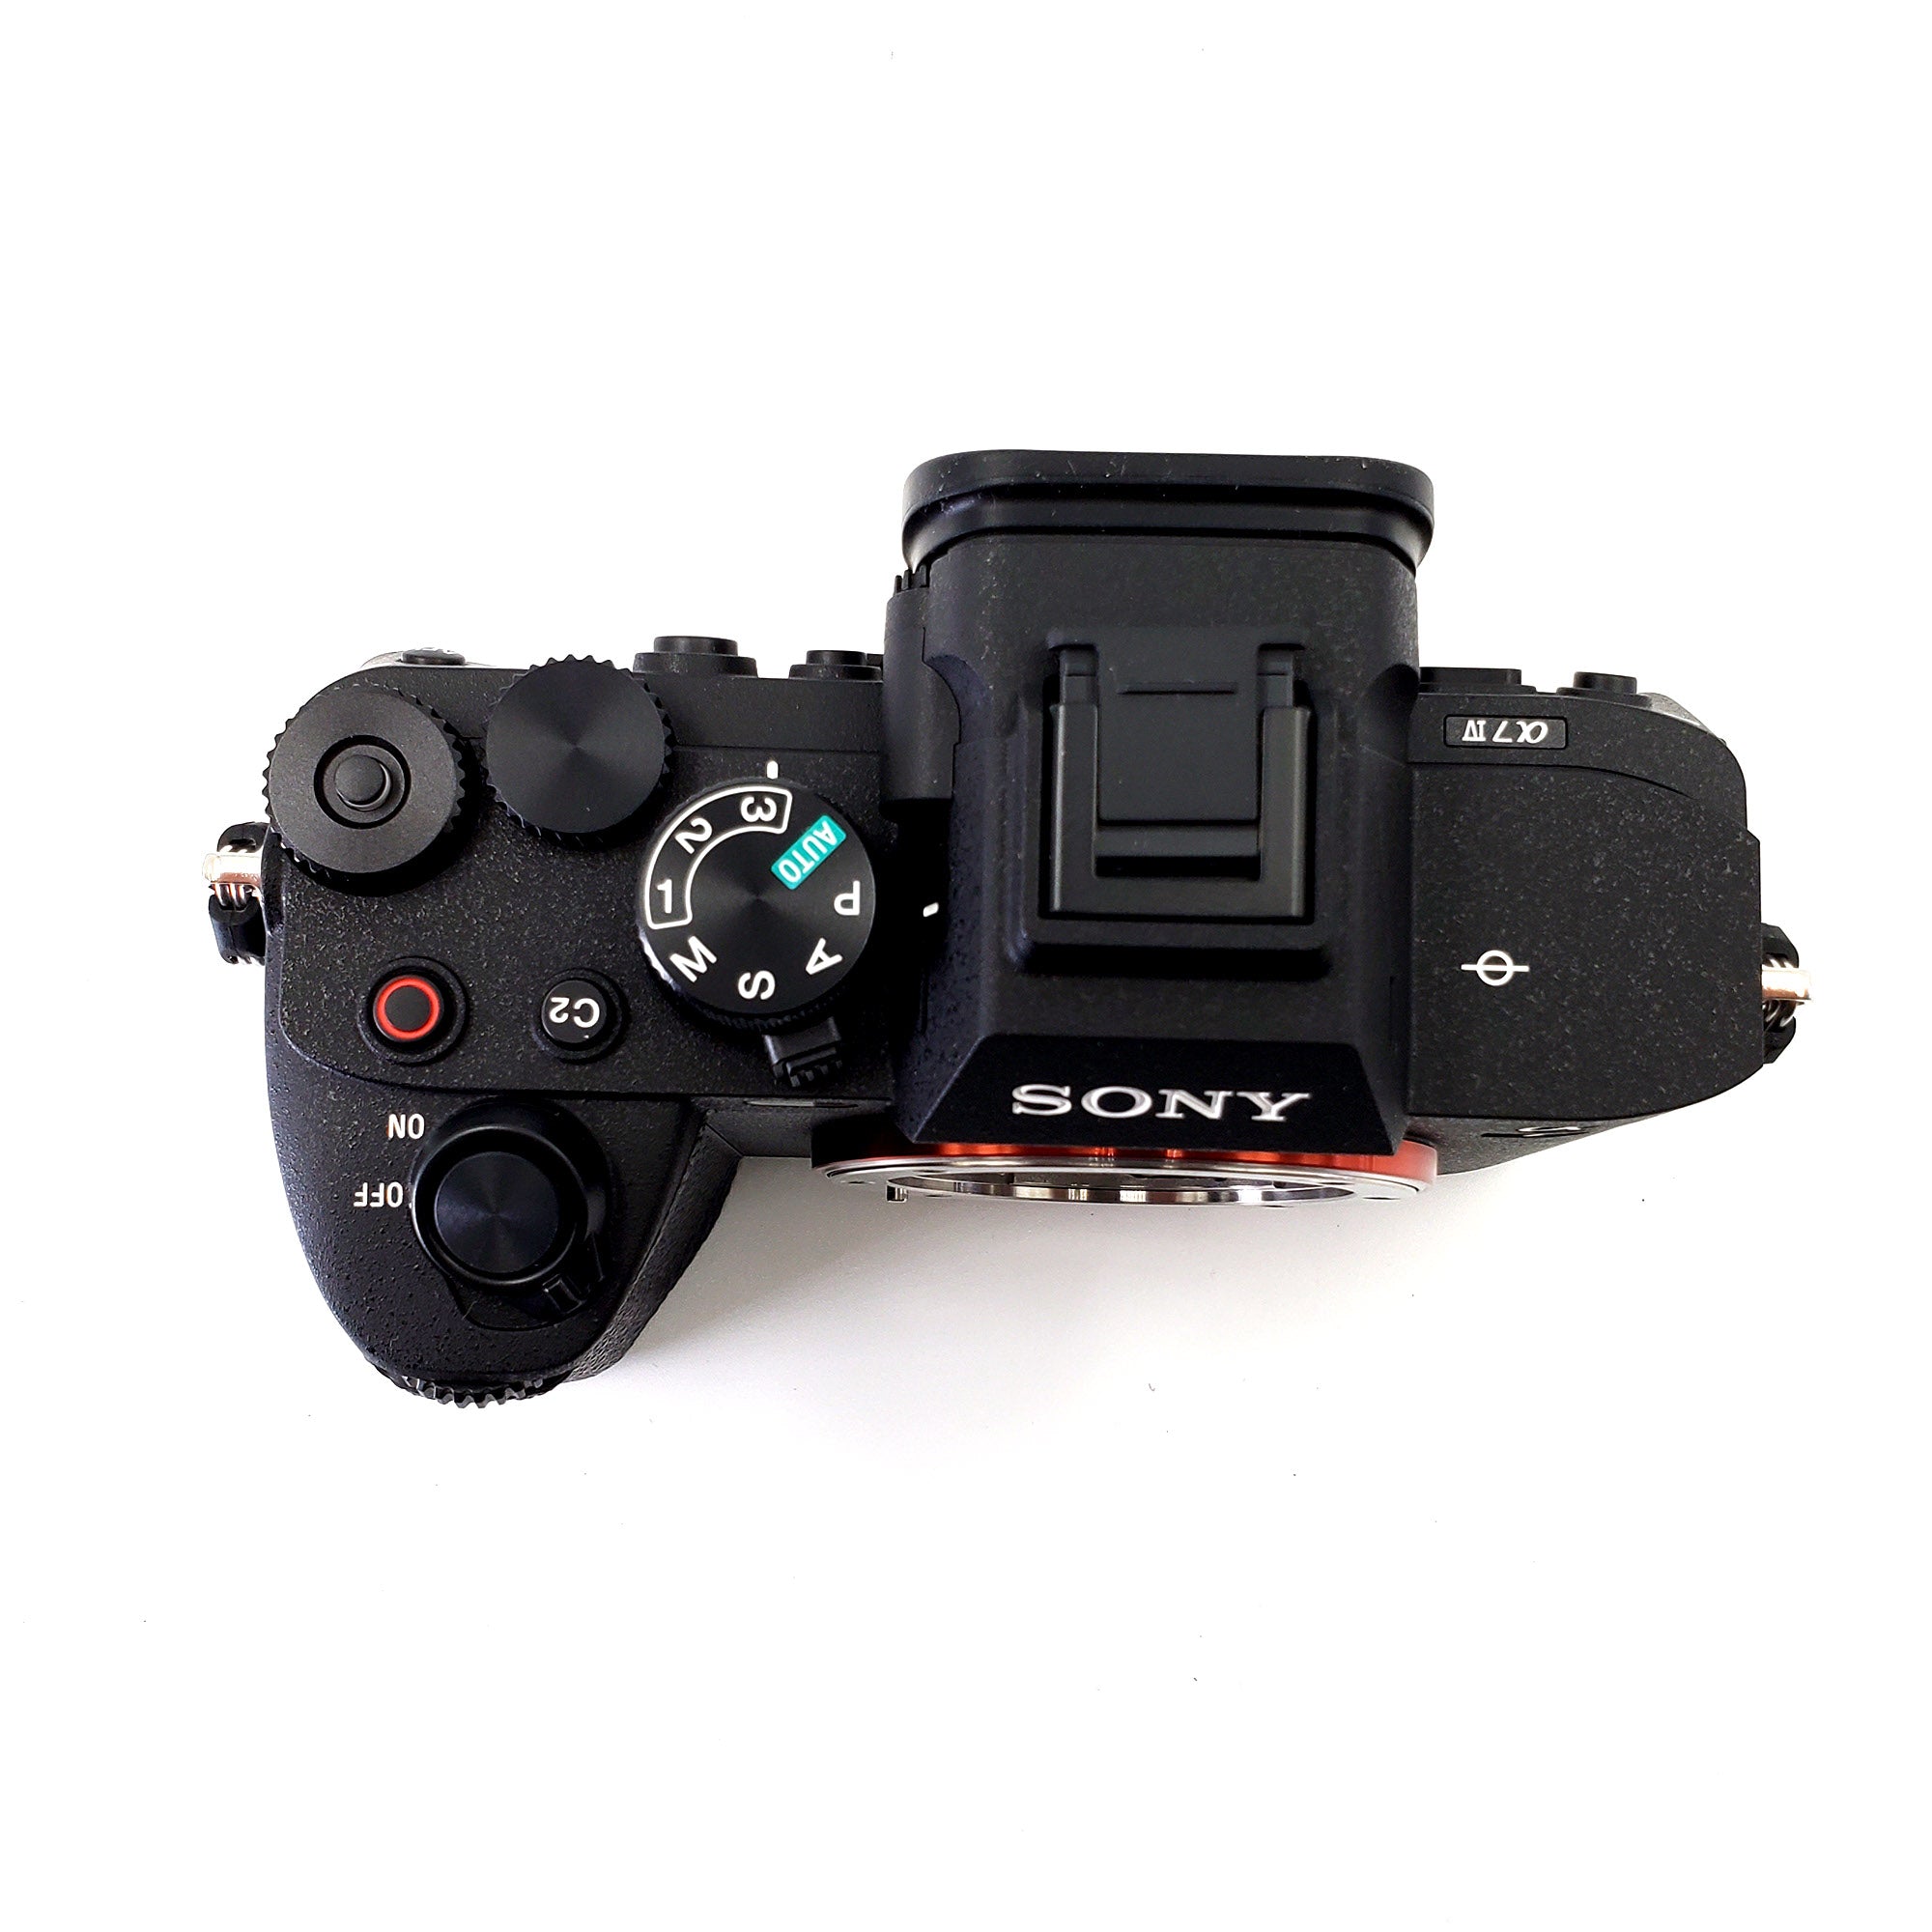 Sony Alpha 7 IV Full-frame Mirrorless Interchangeable Lens Camera,Body Only  , Black